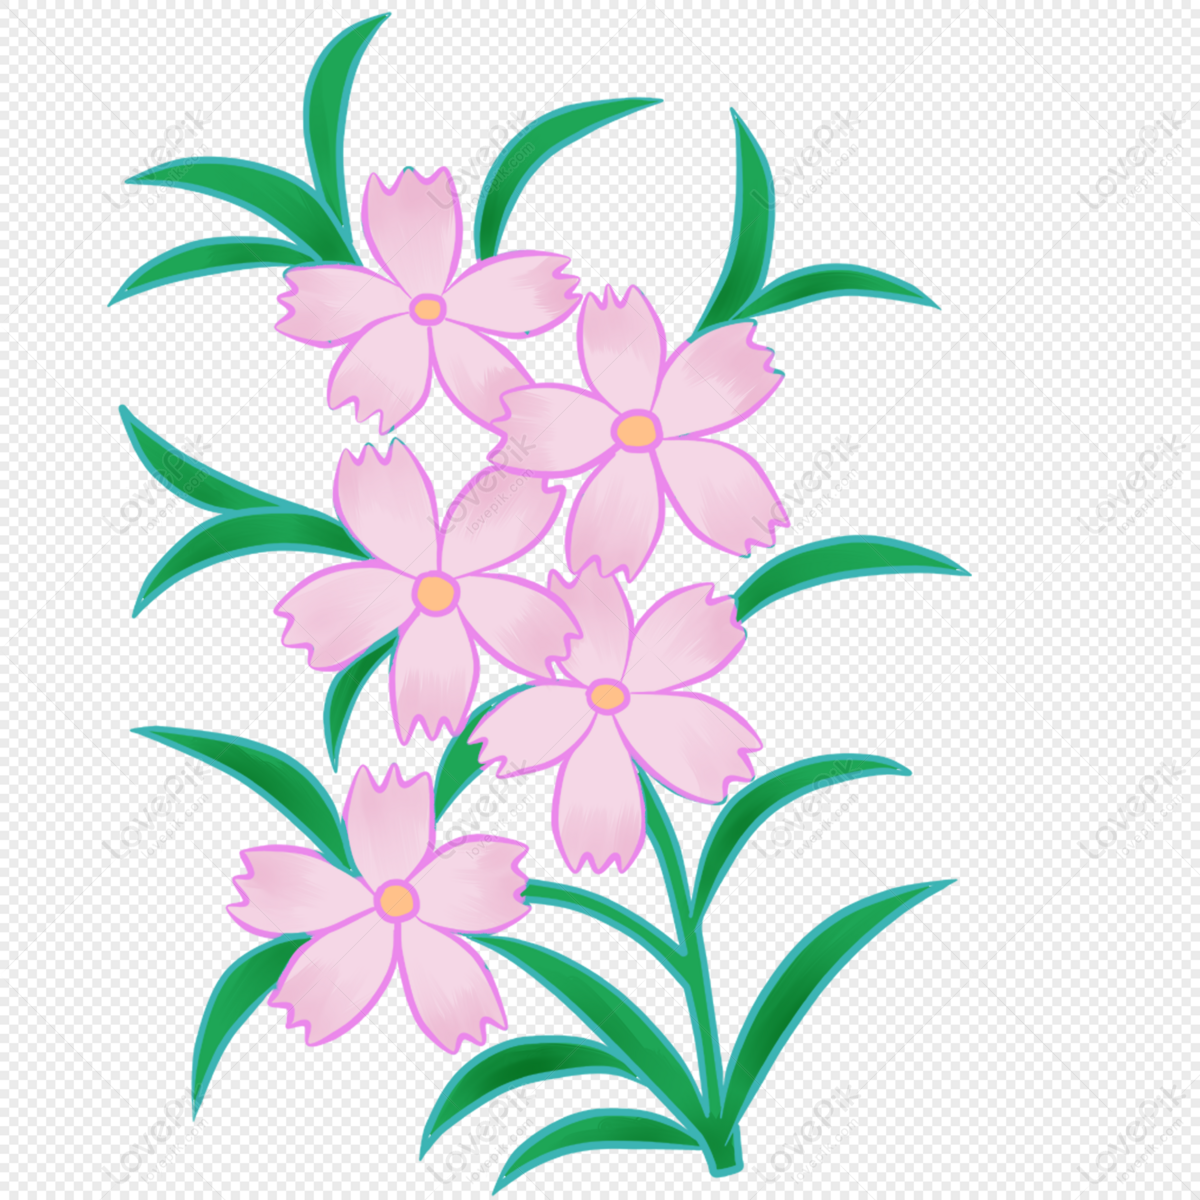 Flores Silvestres PNG Imágenes Gratis - Lovepik